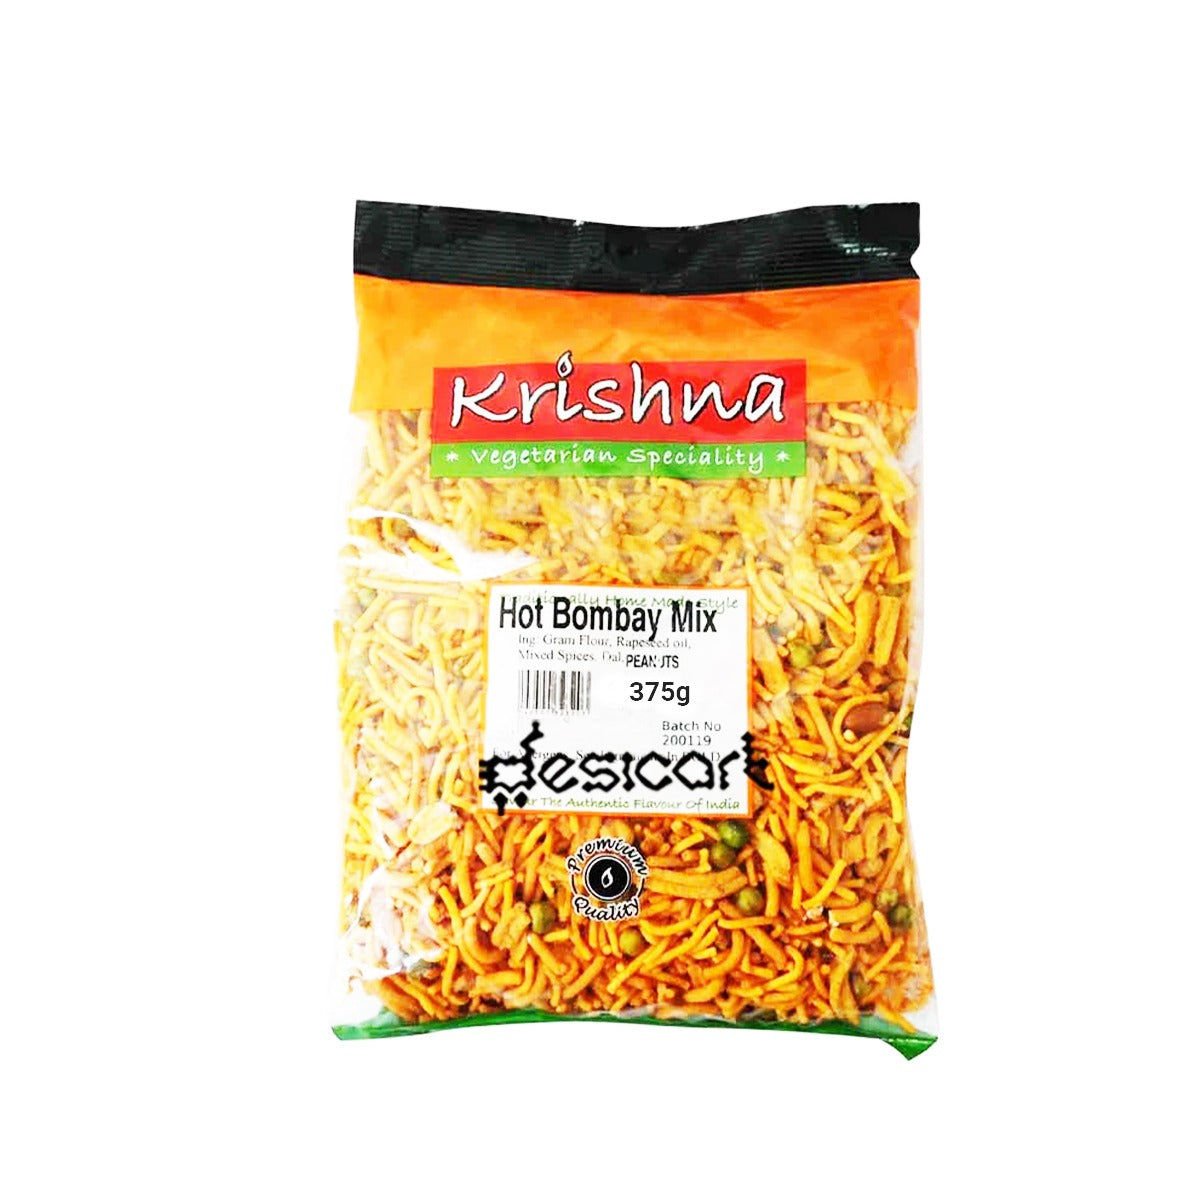 Krishna Hot Bombay Mix 375g